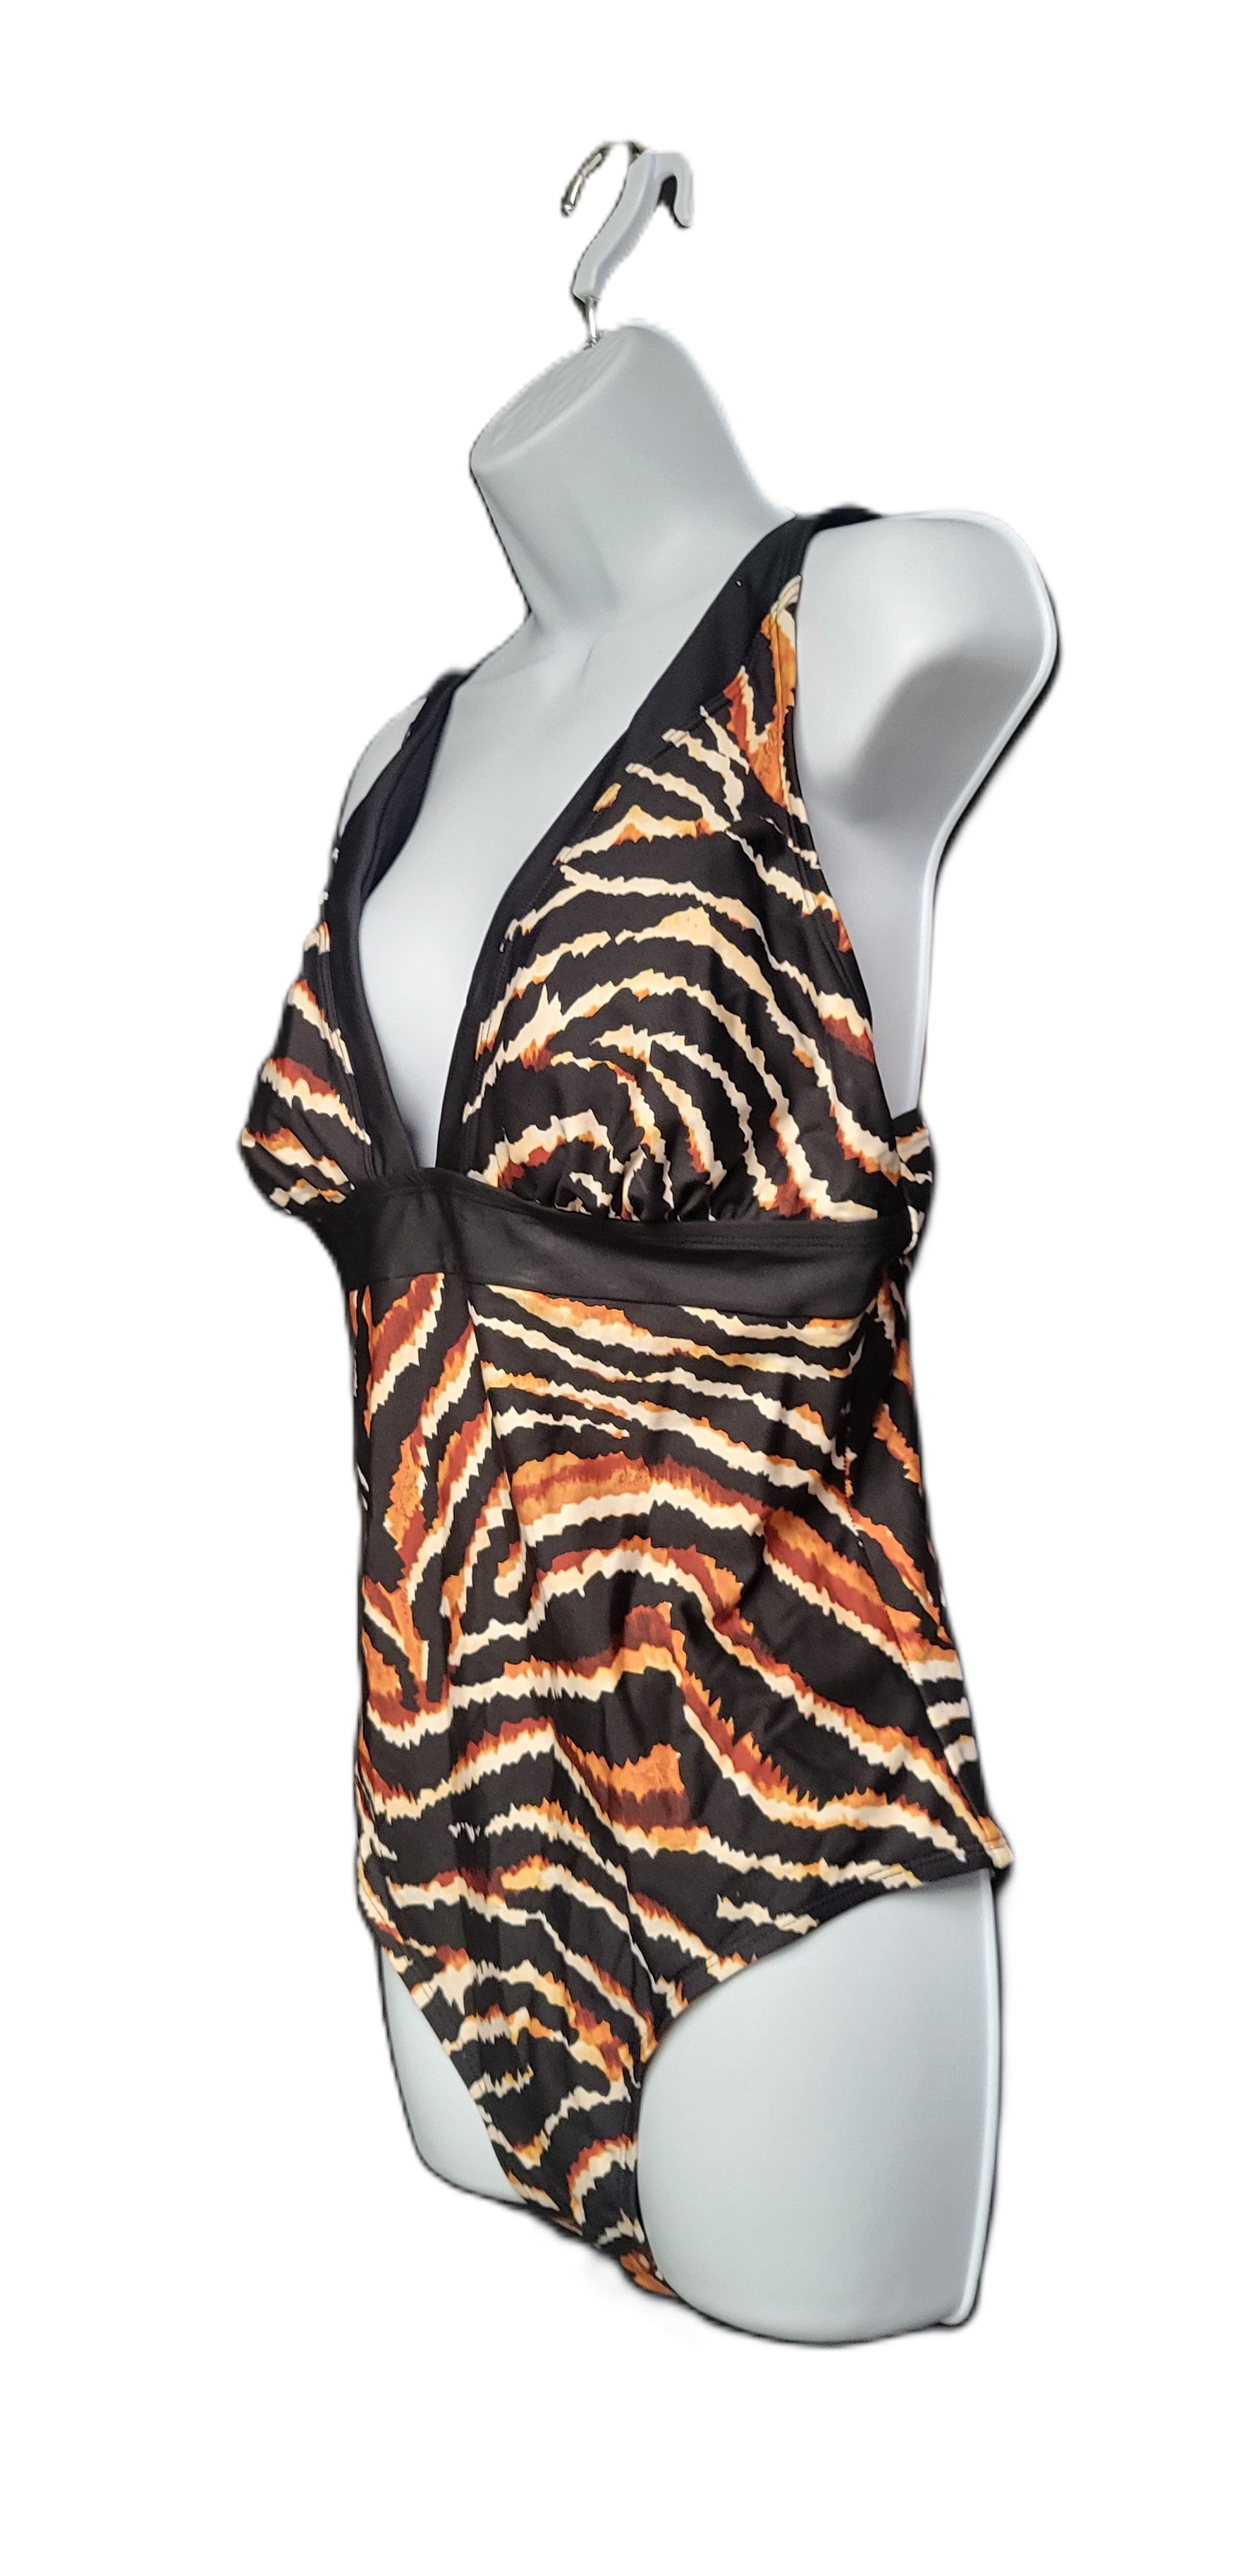 DKNY Tiger-Print One-Piece Swimsuit - Size 14